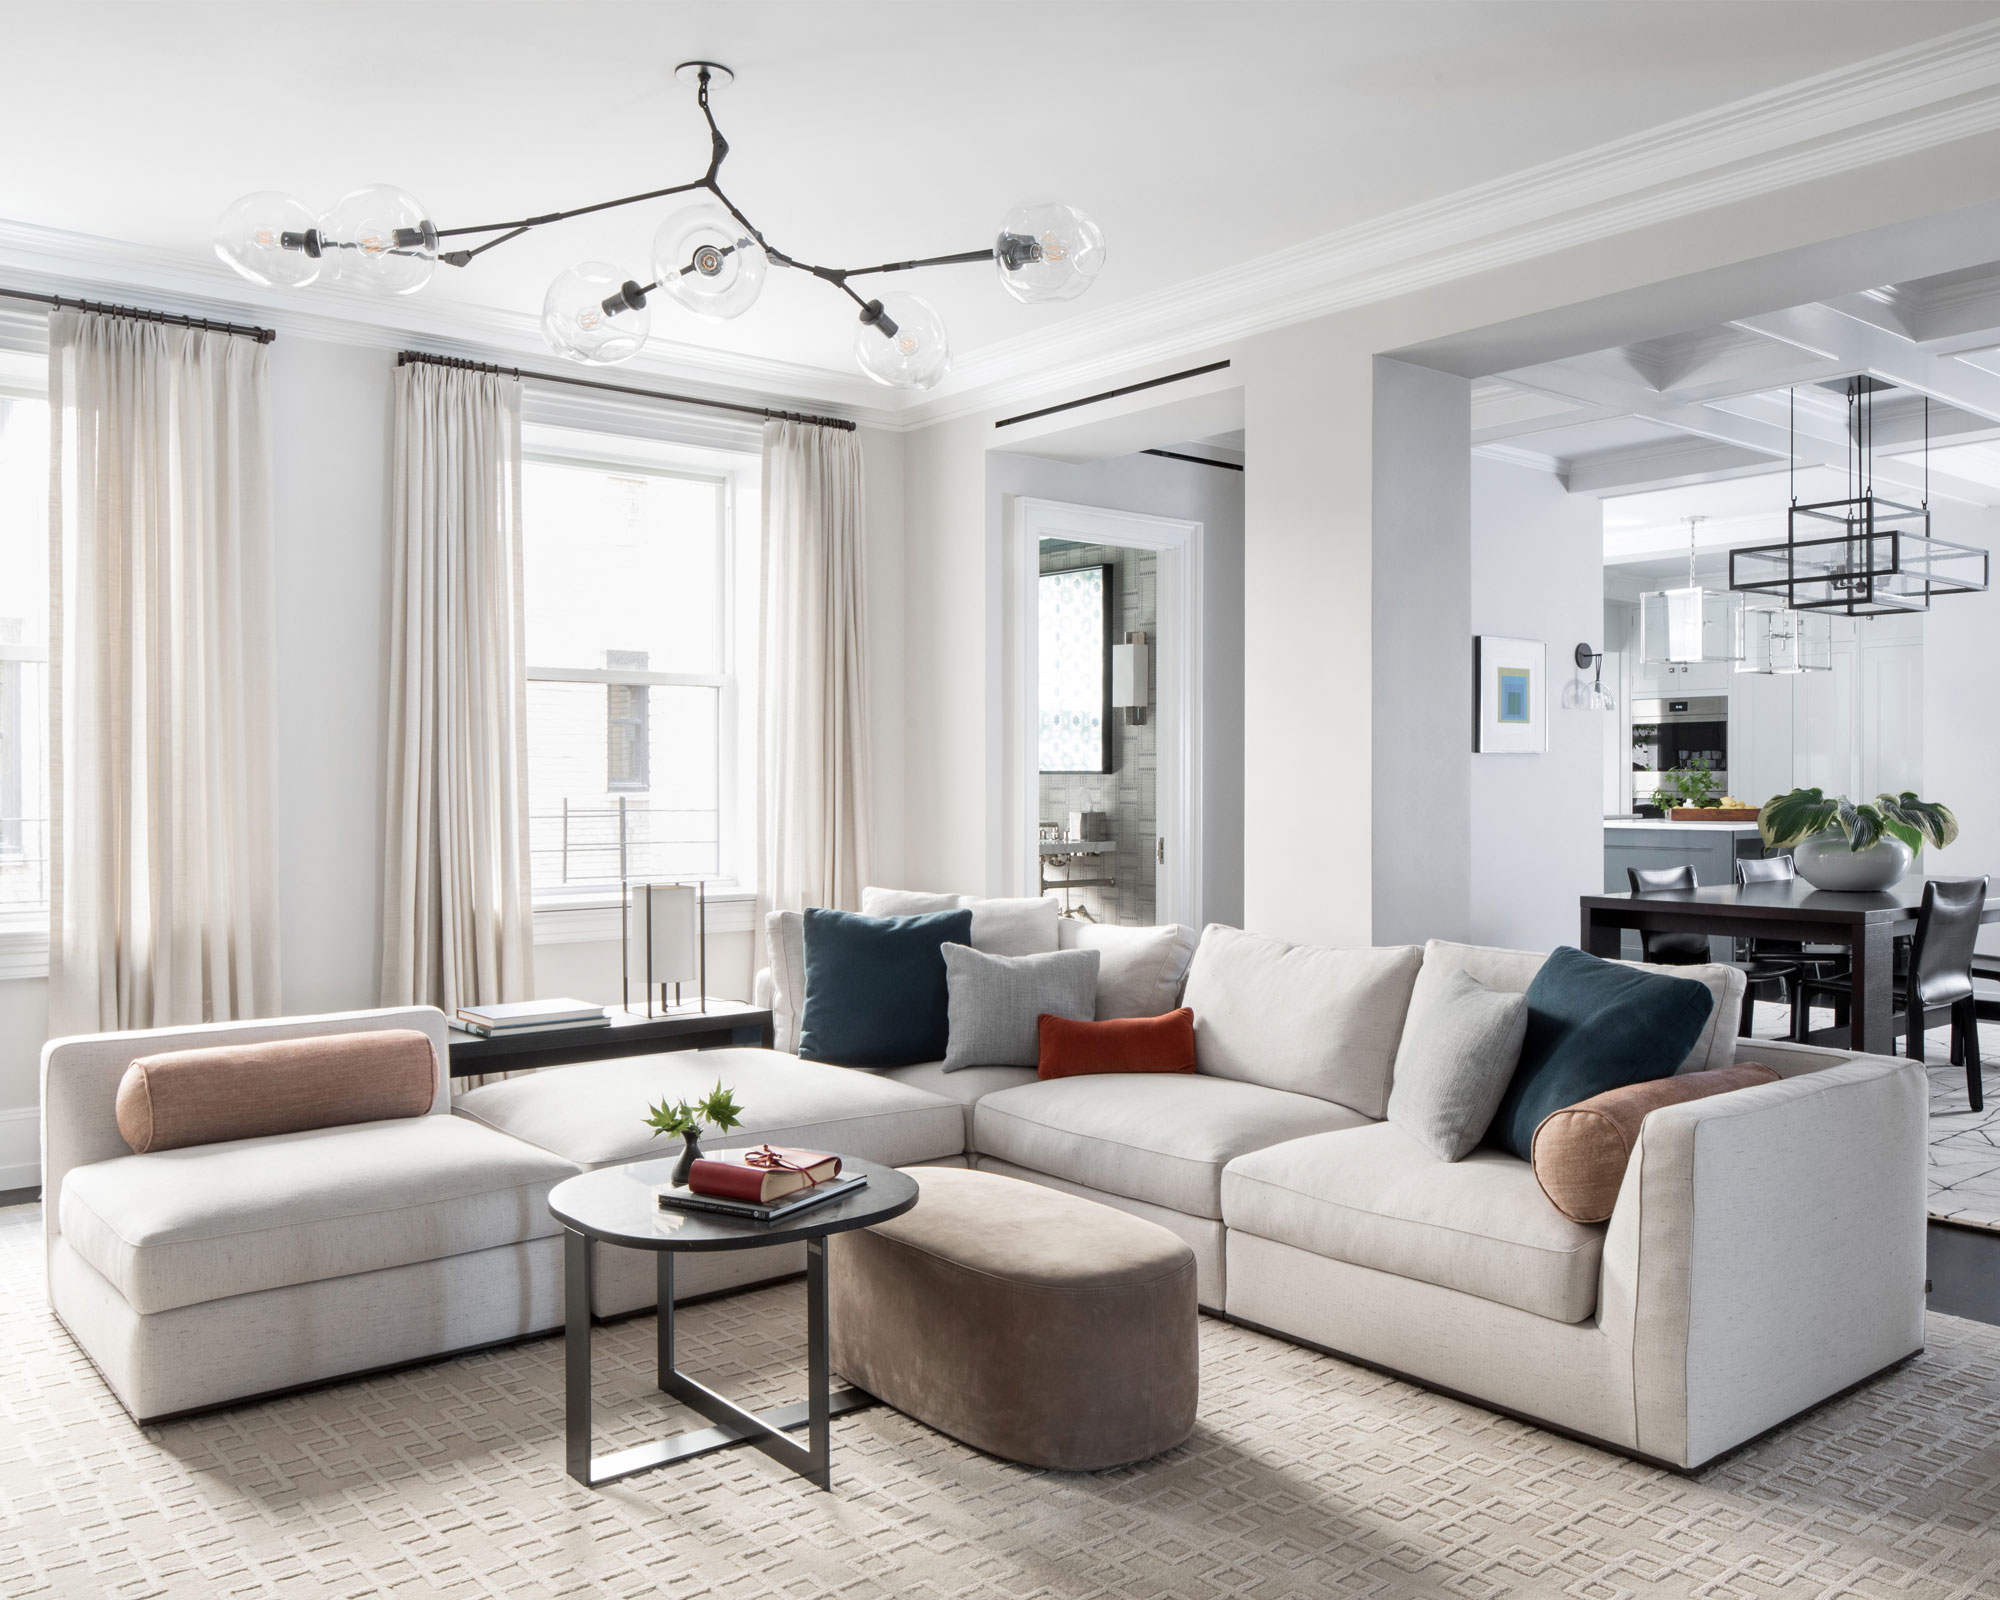 Moderna sala de estar blanca con sofá color crema, nido de mesas, lámpara de techo escultórica, cocina al fondo